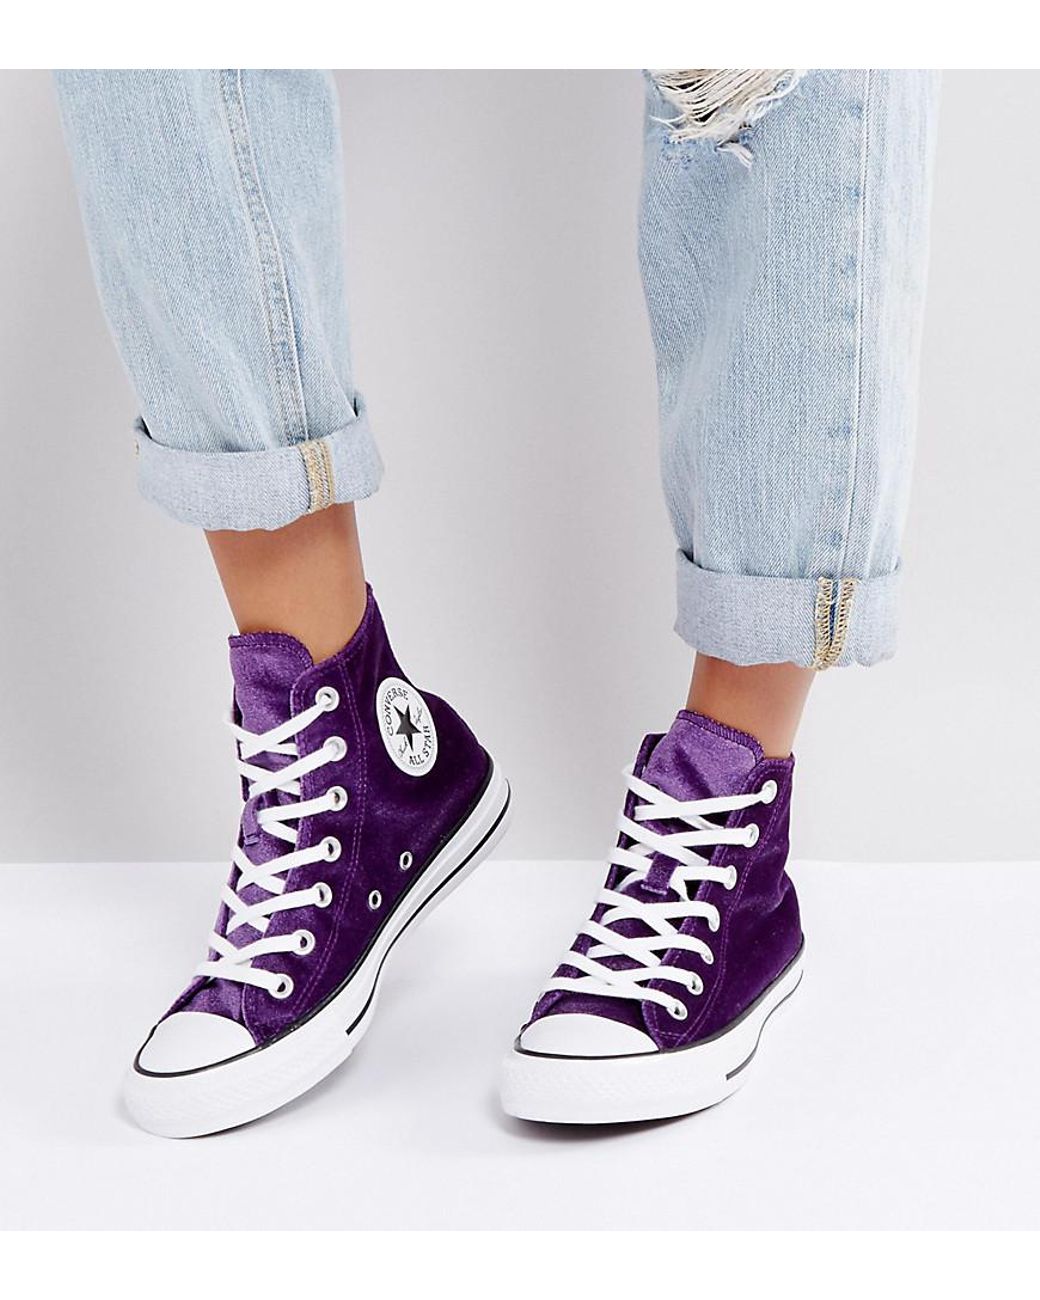 Chuck Taylor High Sneakers In Purple Velvet | Lyst